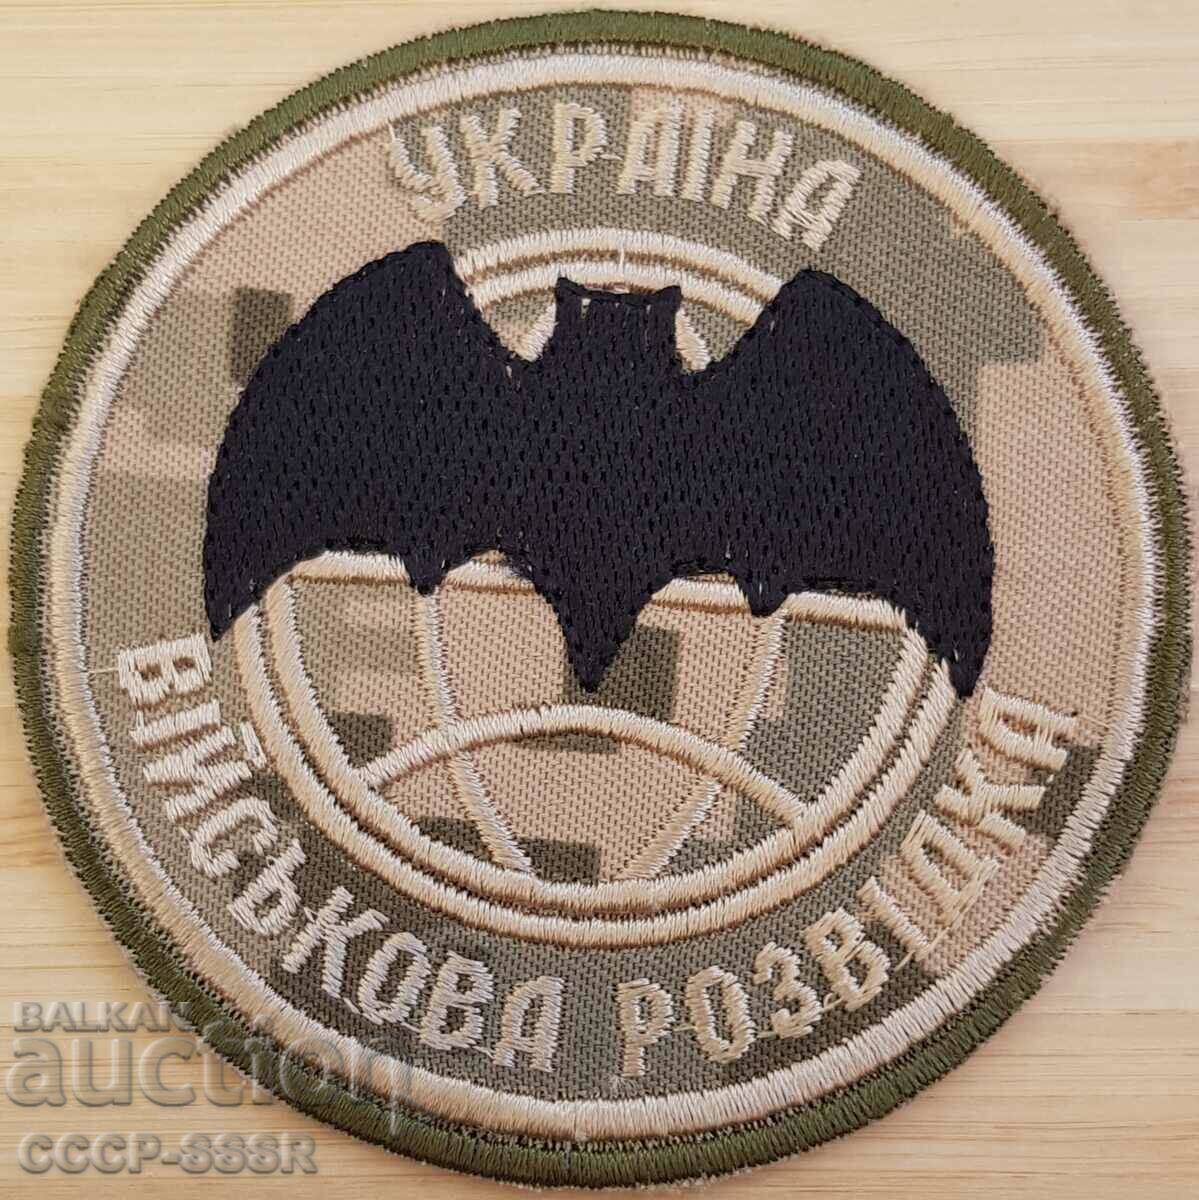 Ukraine, chevron, uniform patch, GUR (military intelligence)